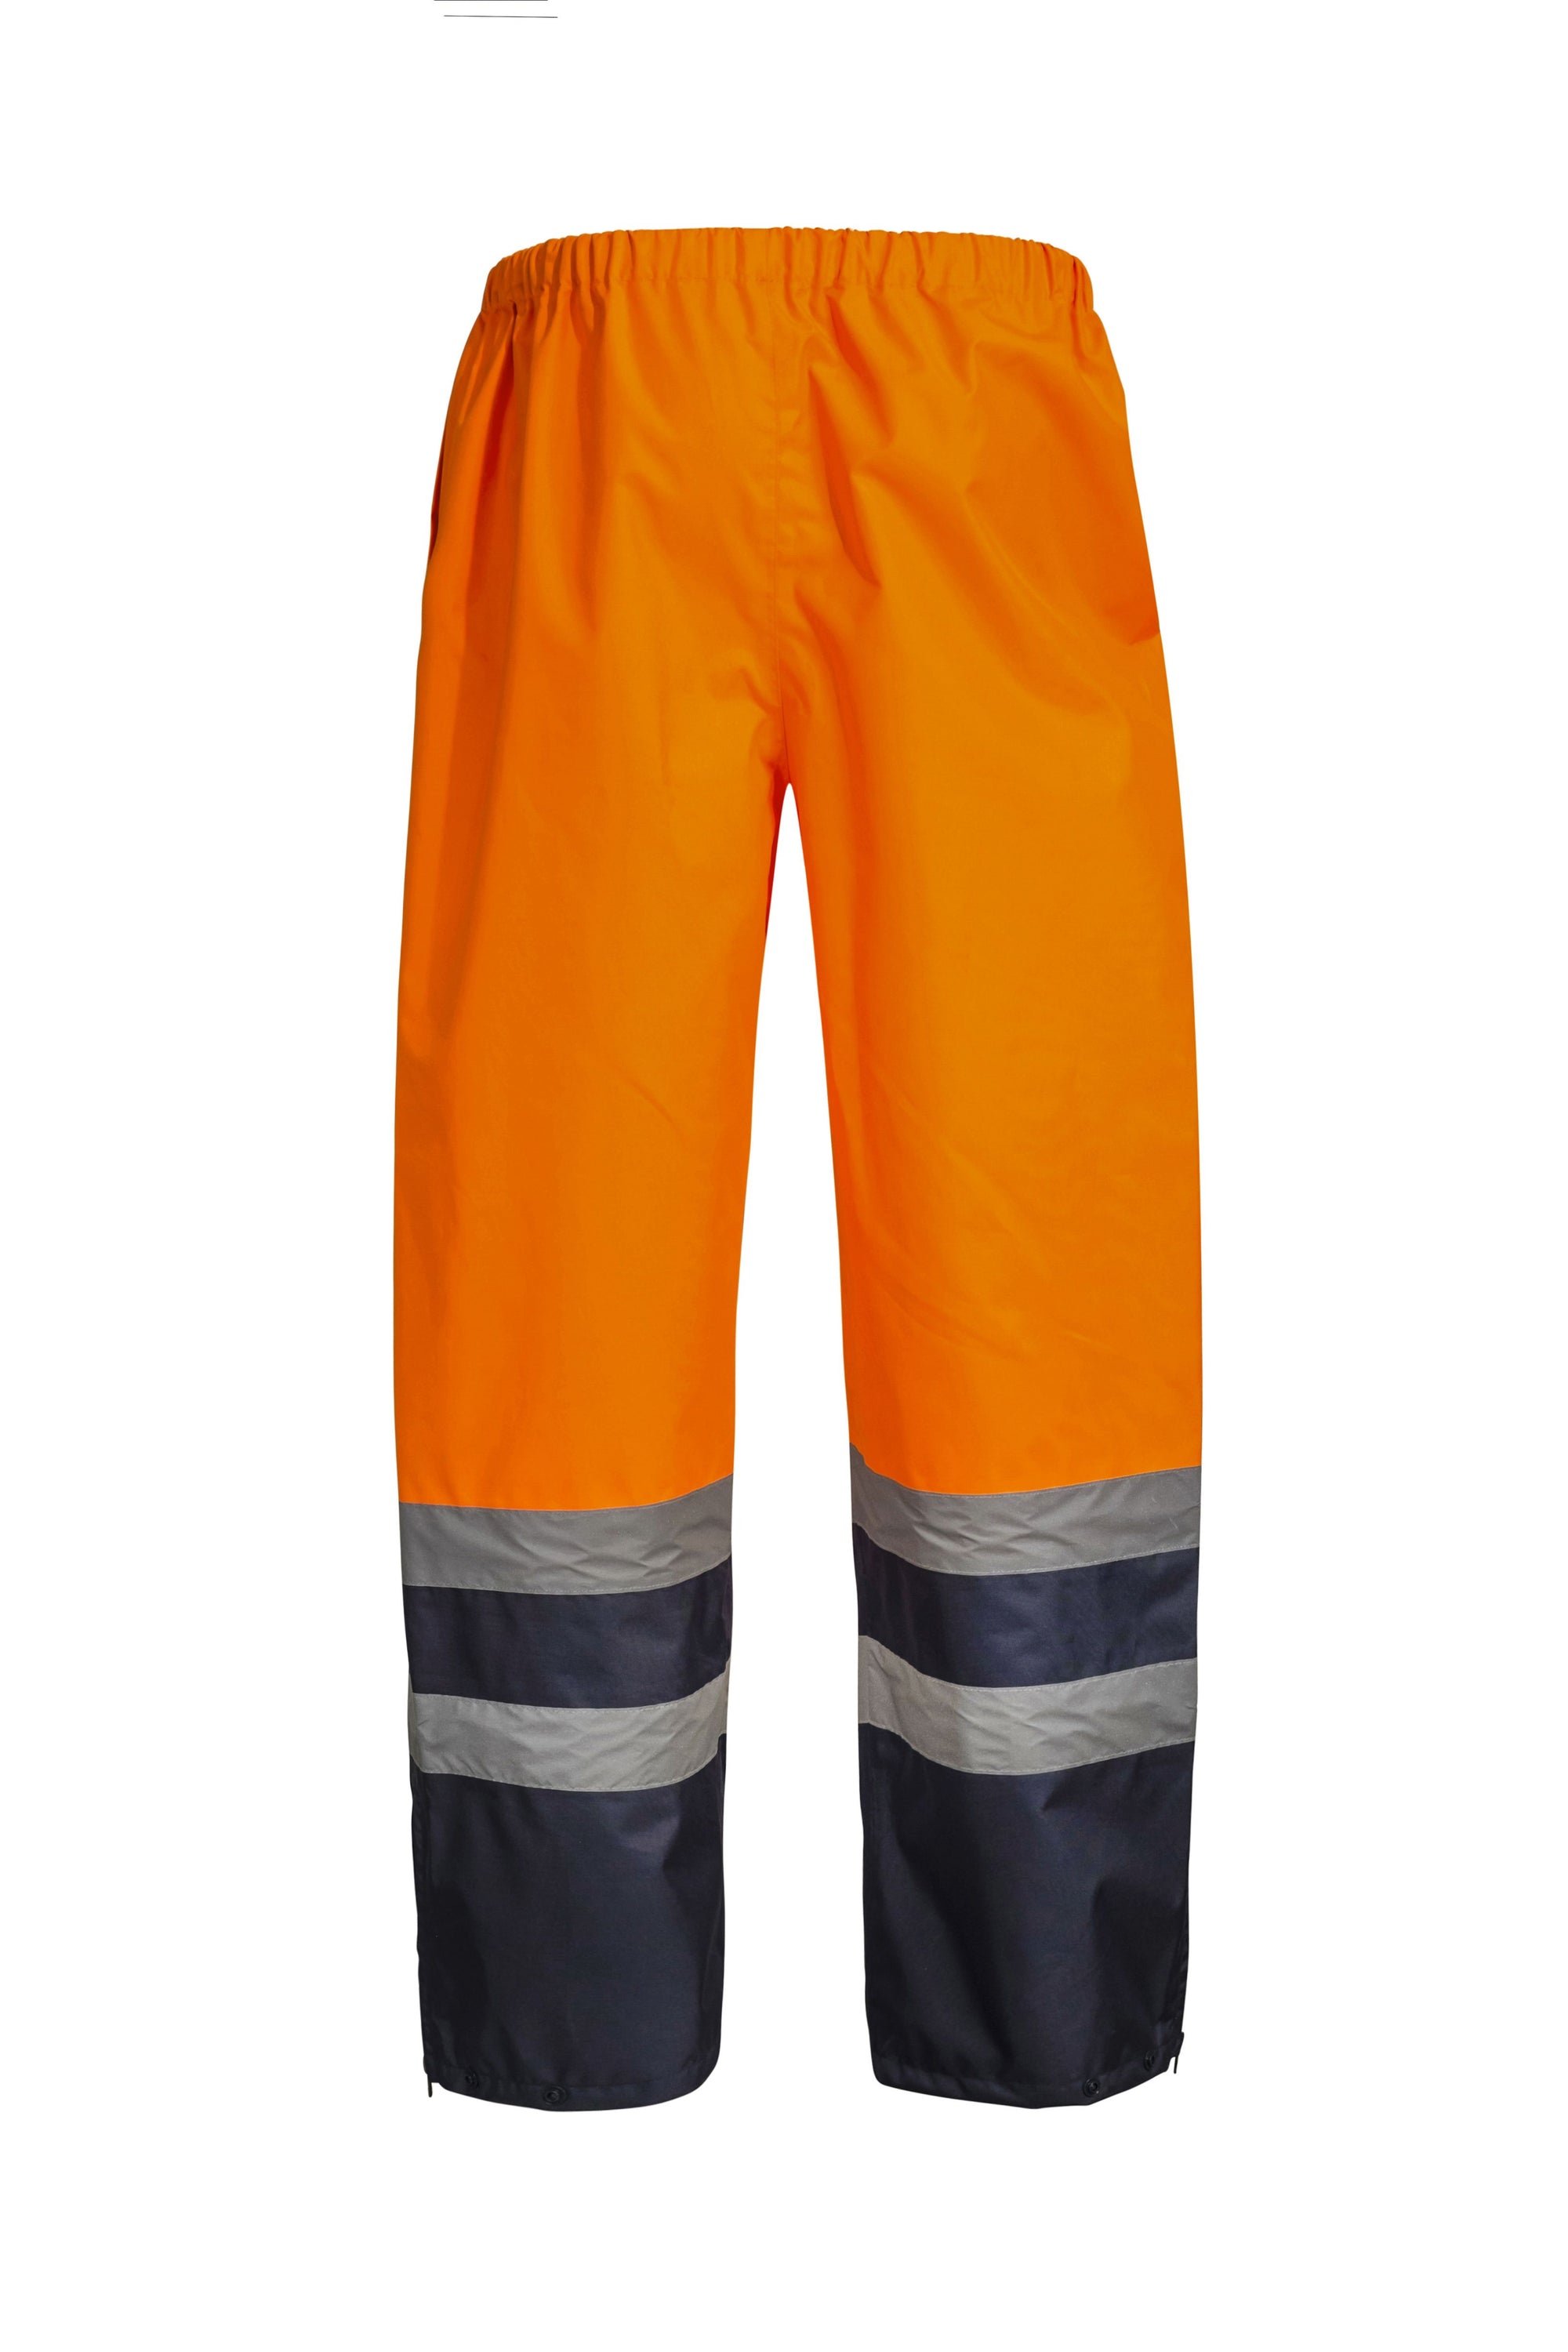 WorkCraft Mens bm-Taped Rain Pants 300D Orange/Navy M